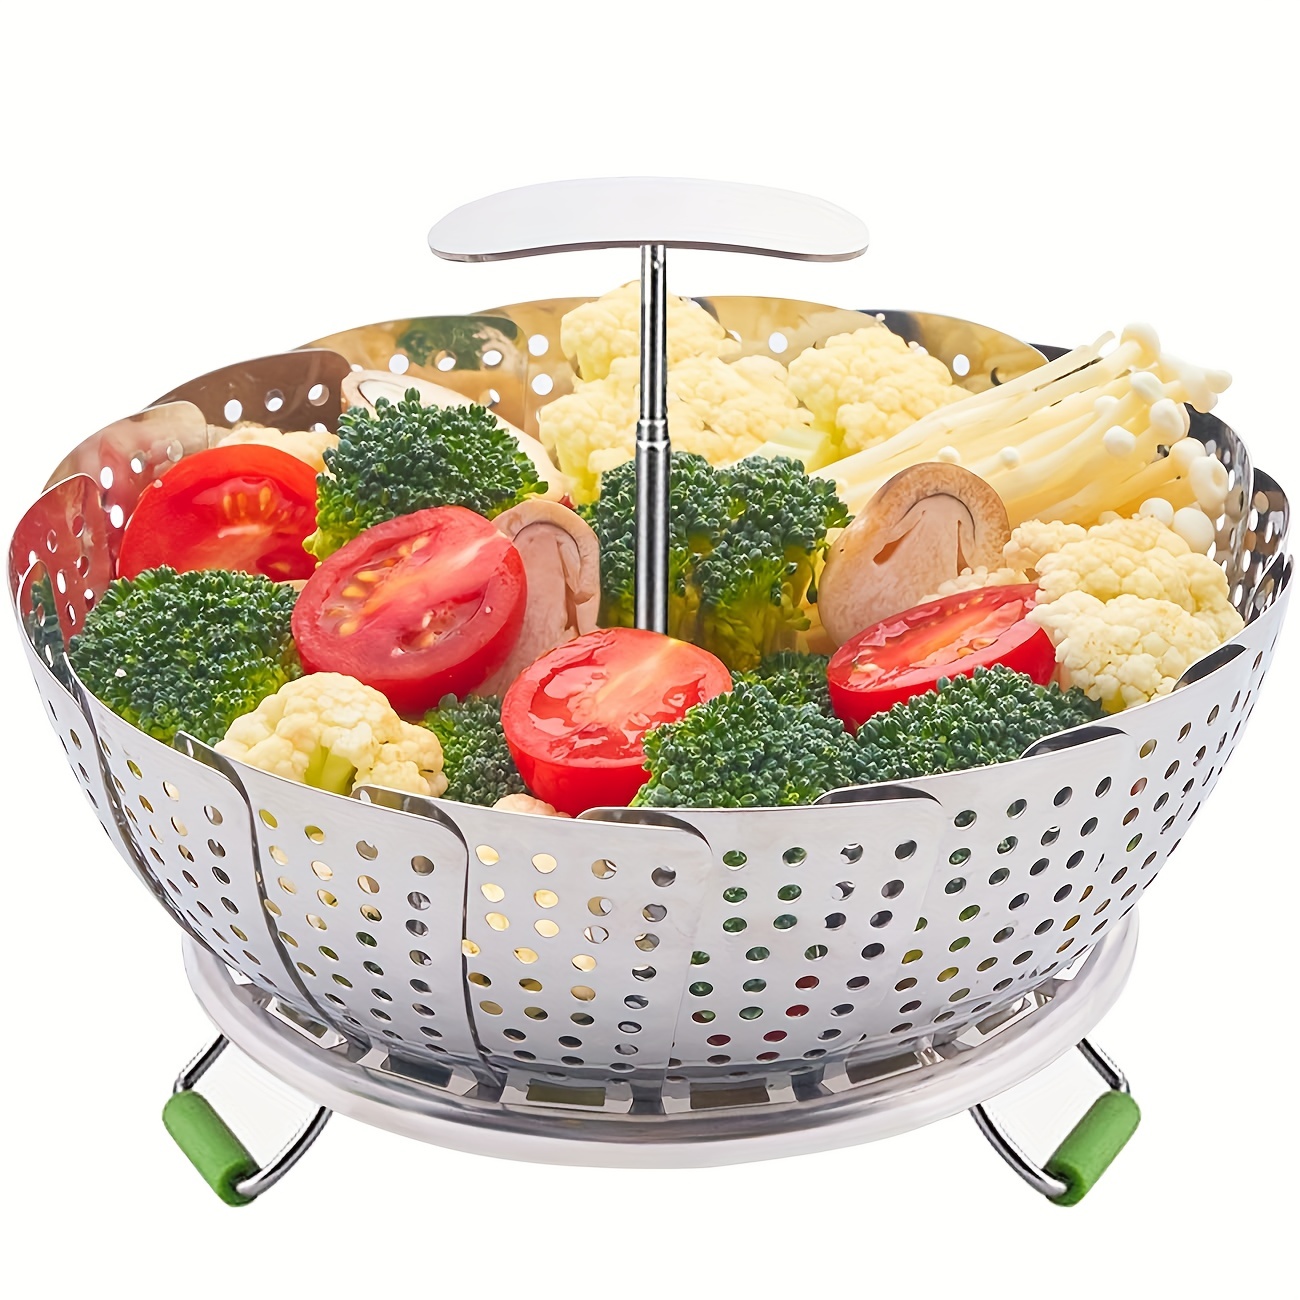 Steamer Basket Stainless Steel, Vegetable Steamer Basket for Pot